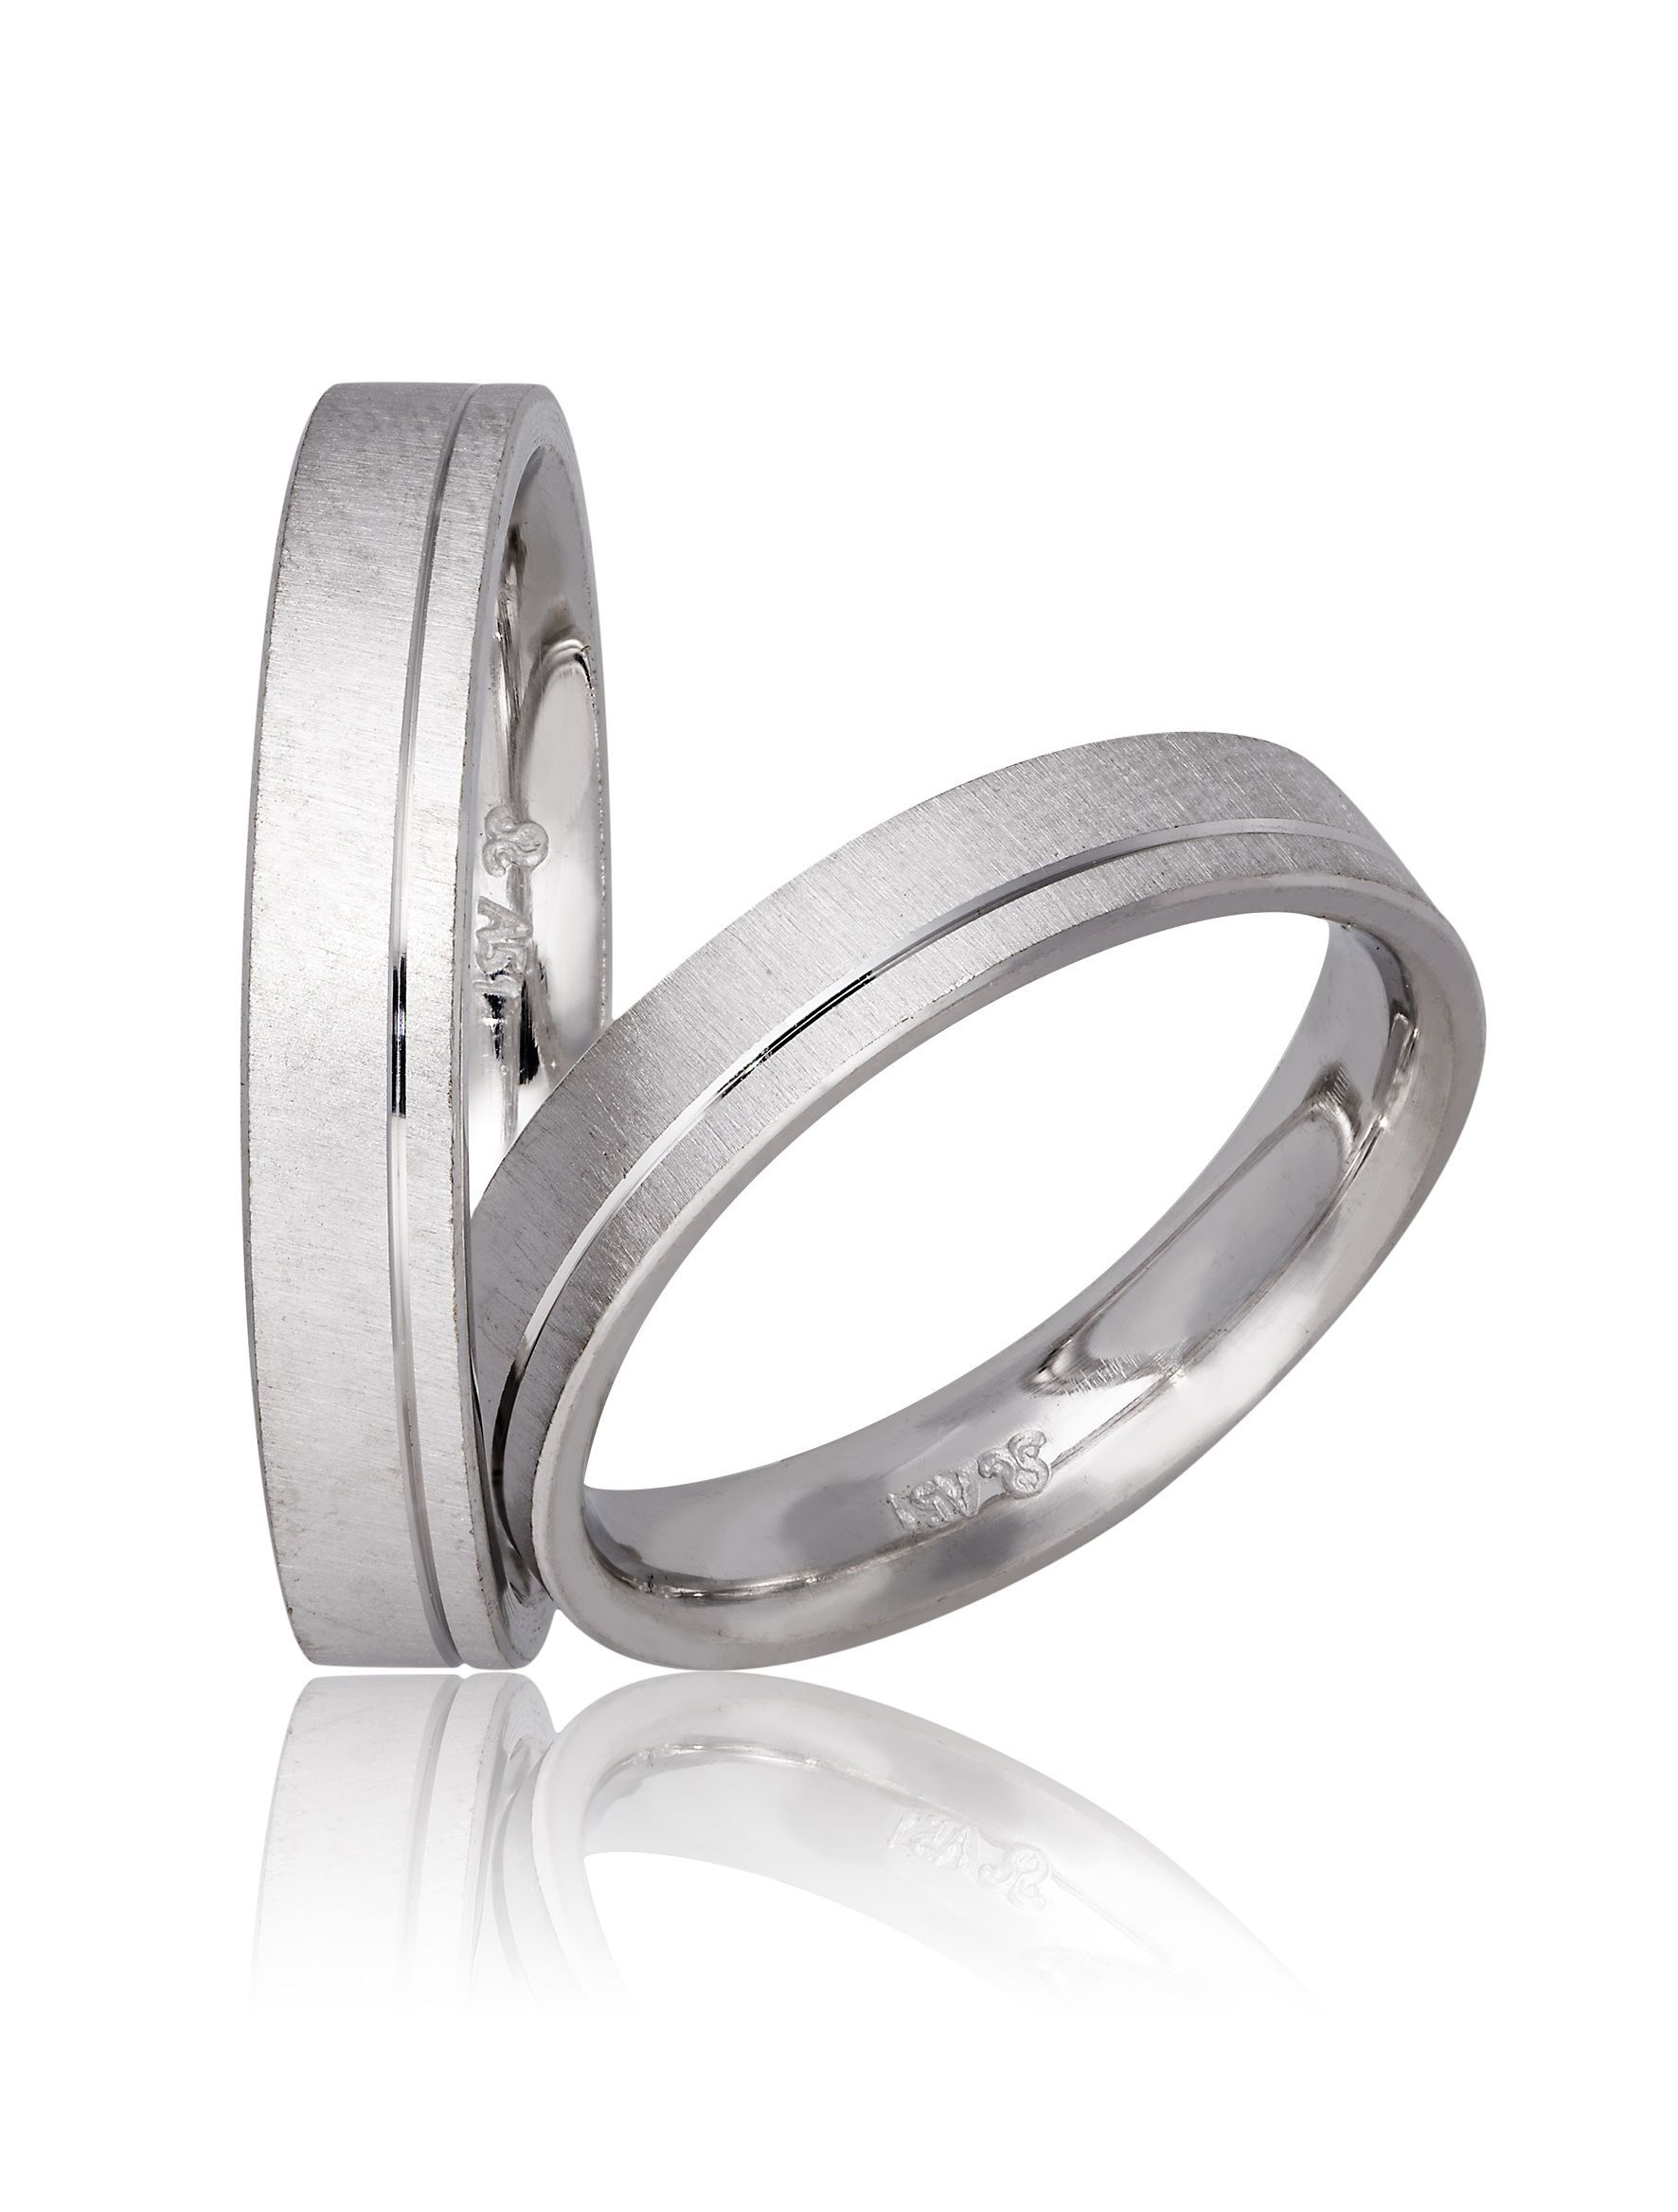 White gold wedding rings 4mm (code 708)